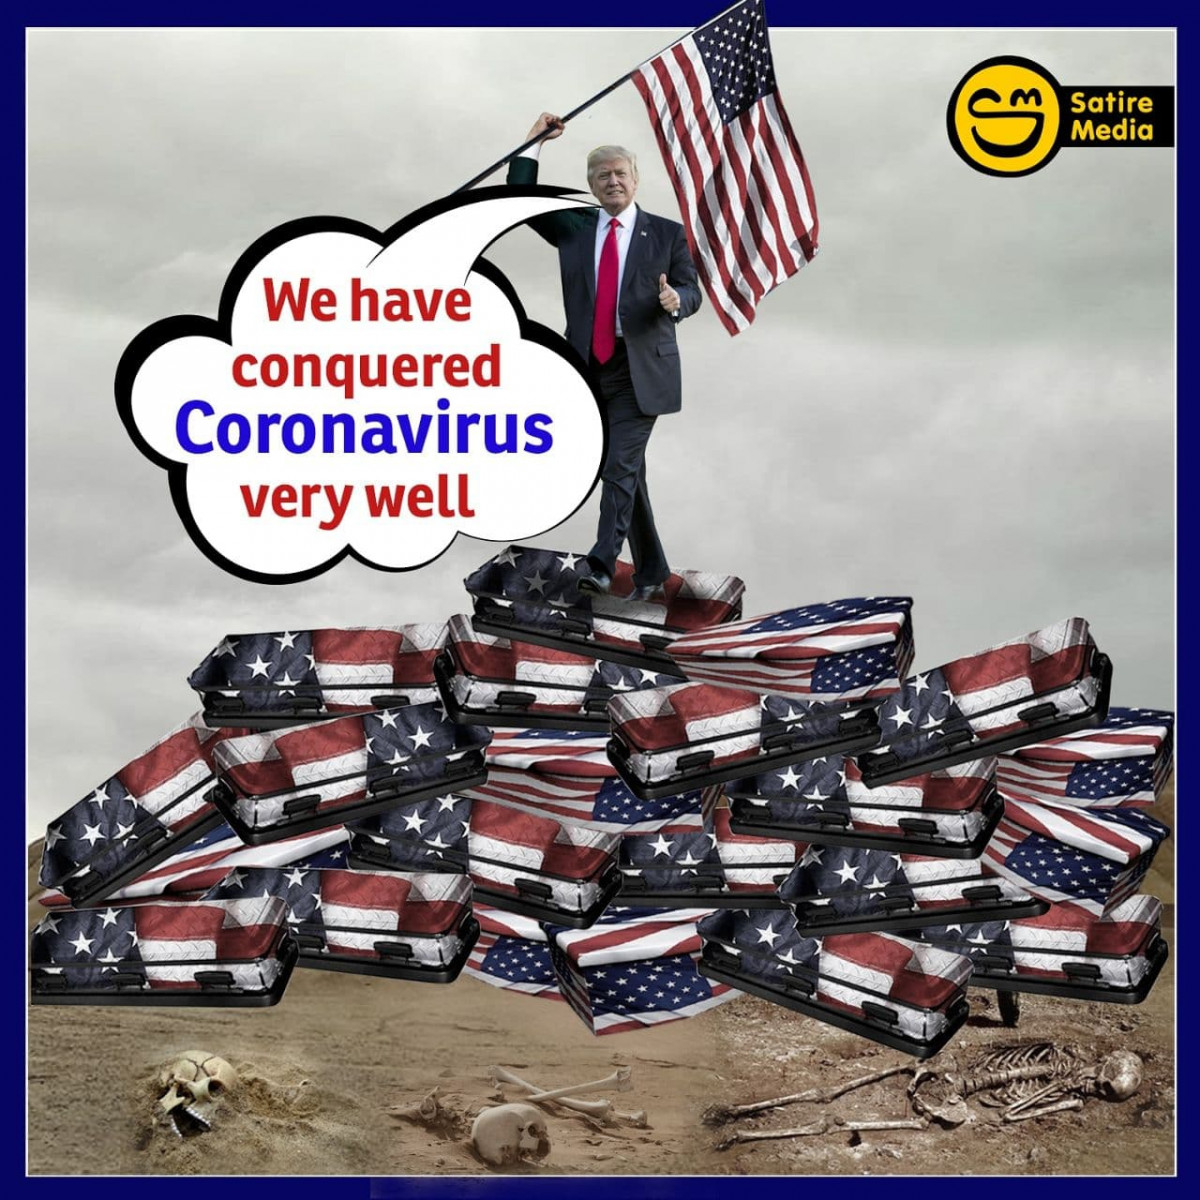 We have conquered Coronavirus very well